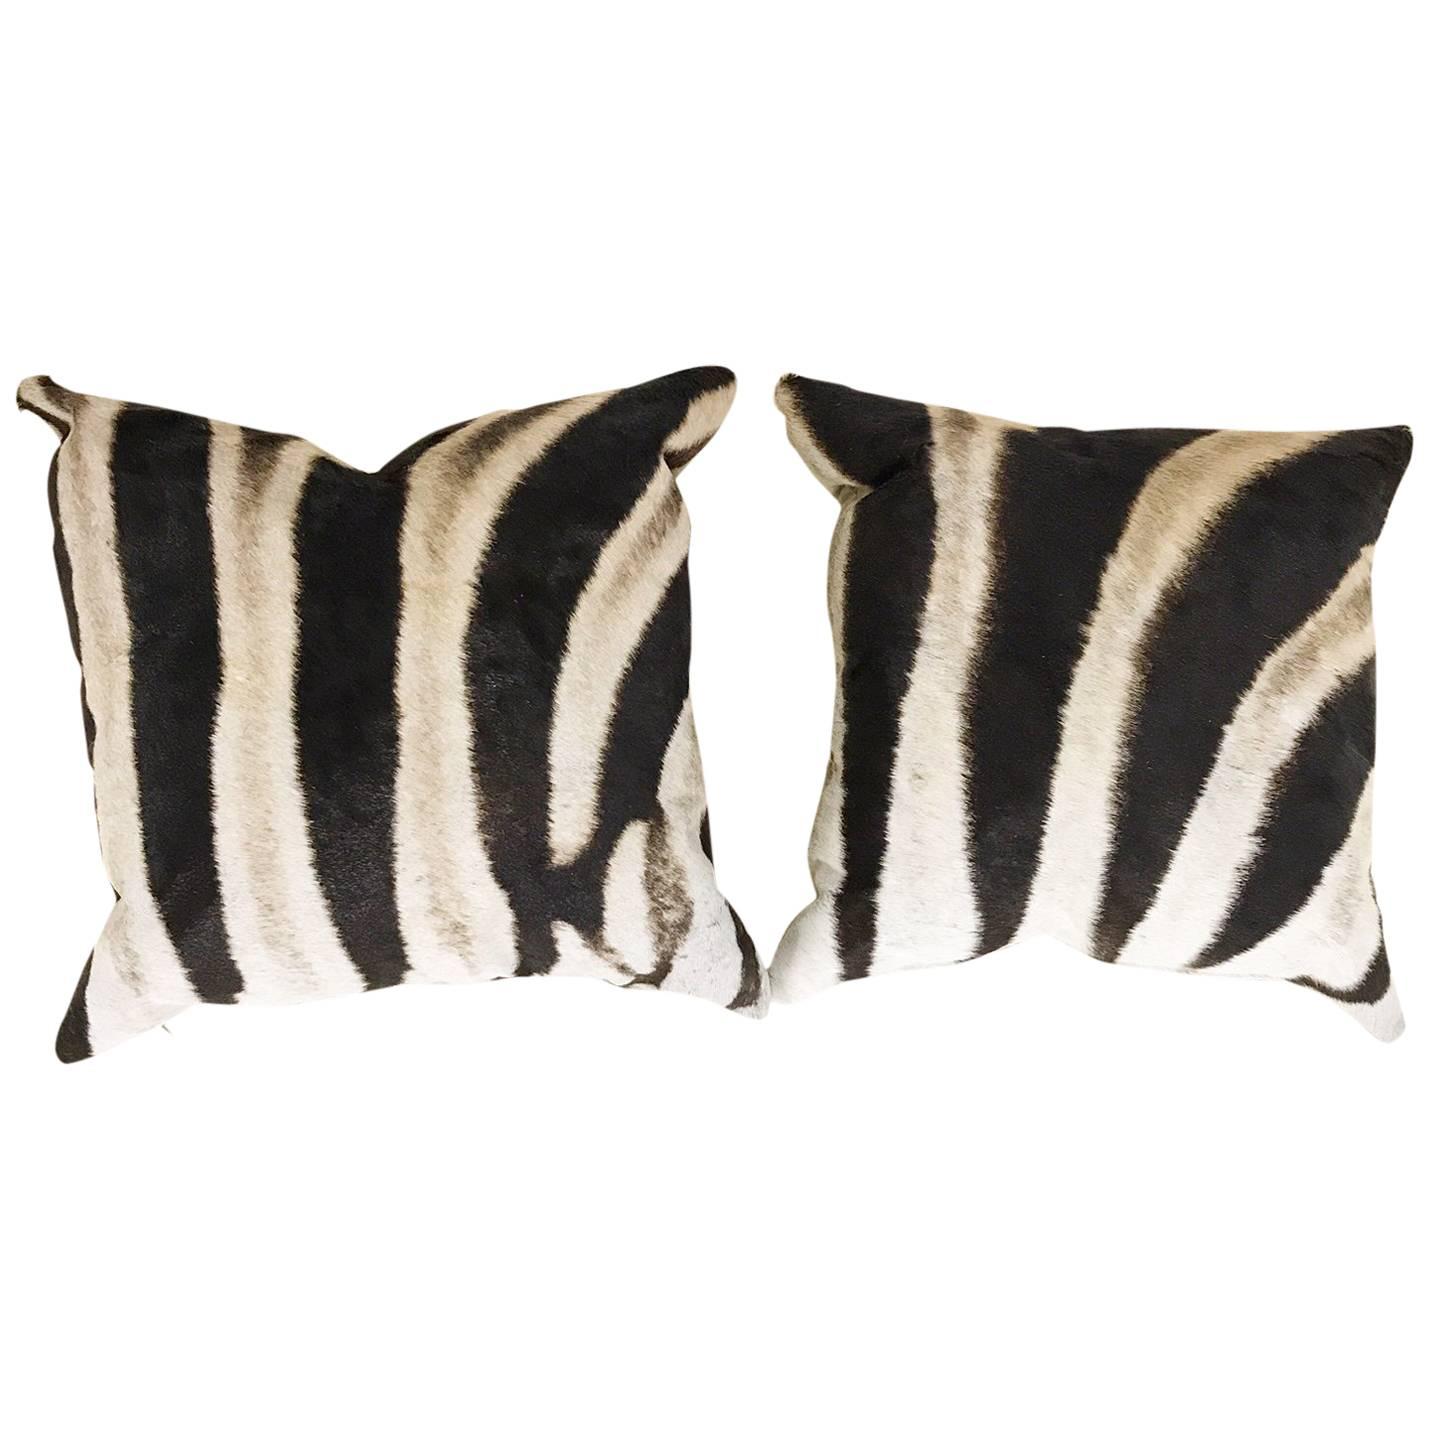 Pair of Zebra Hide Pillows